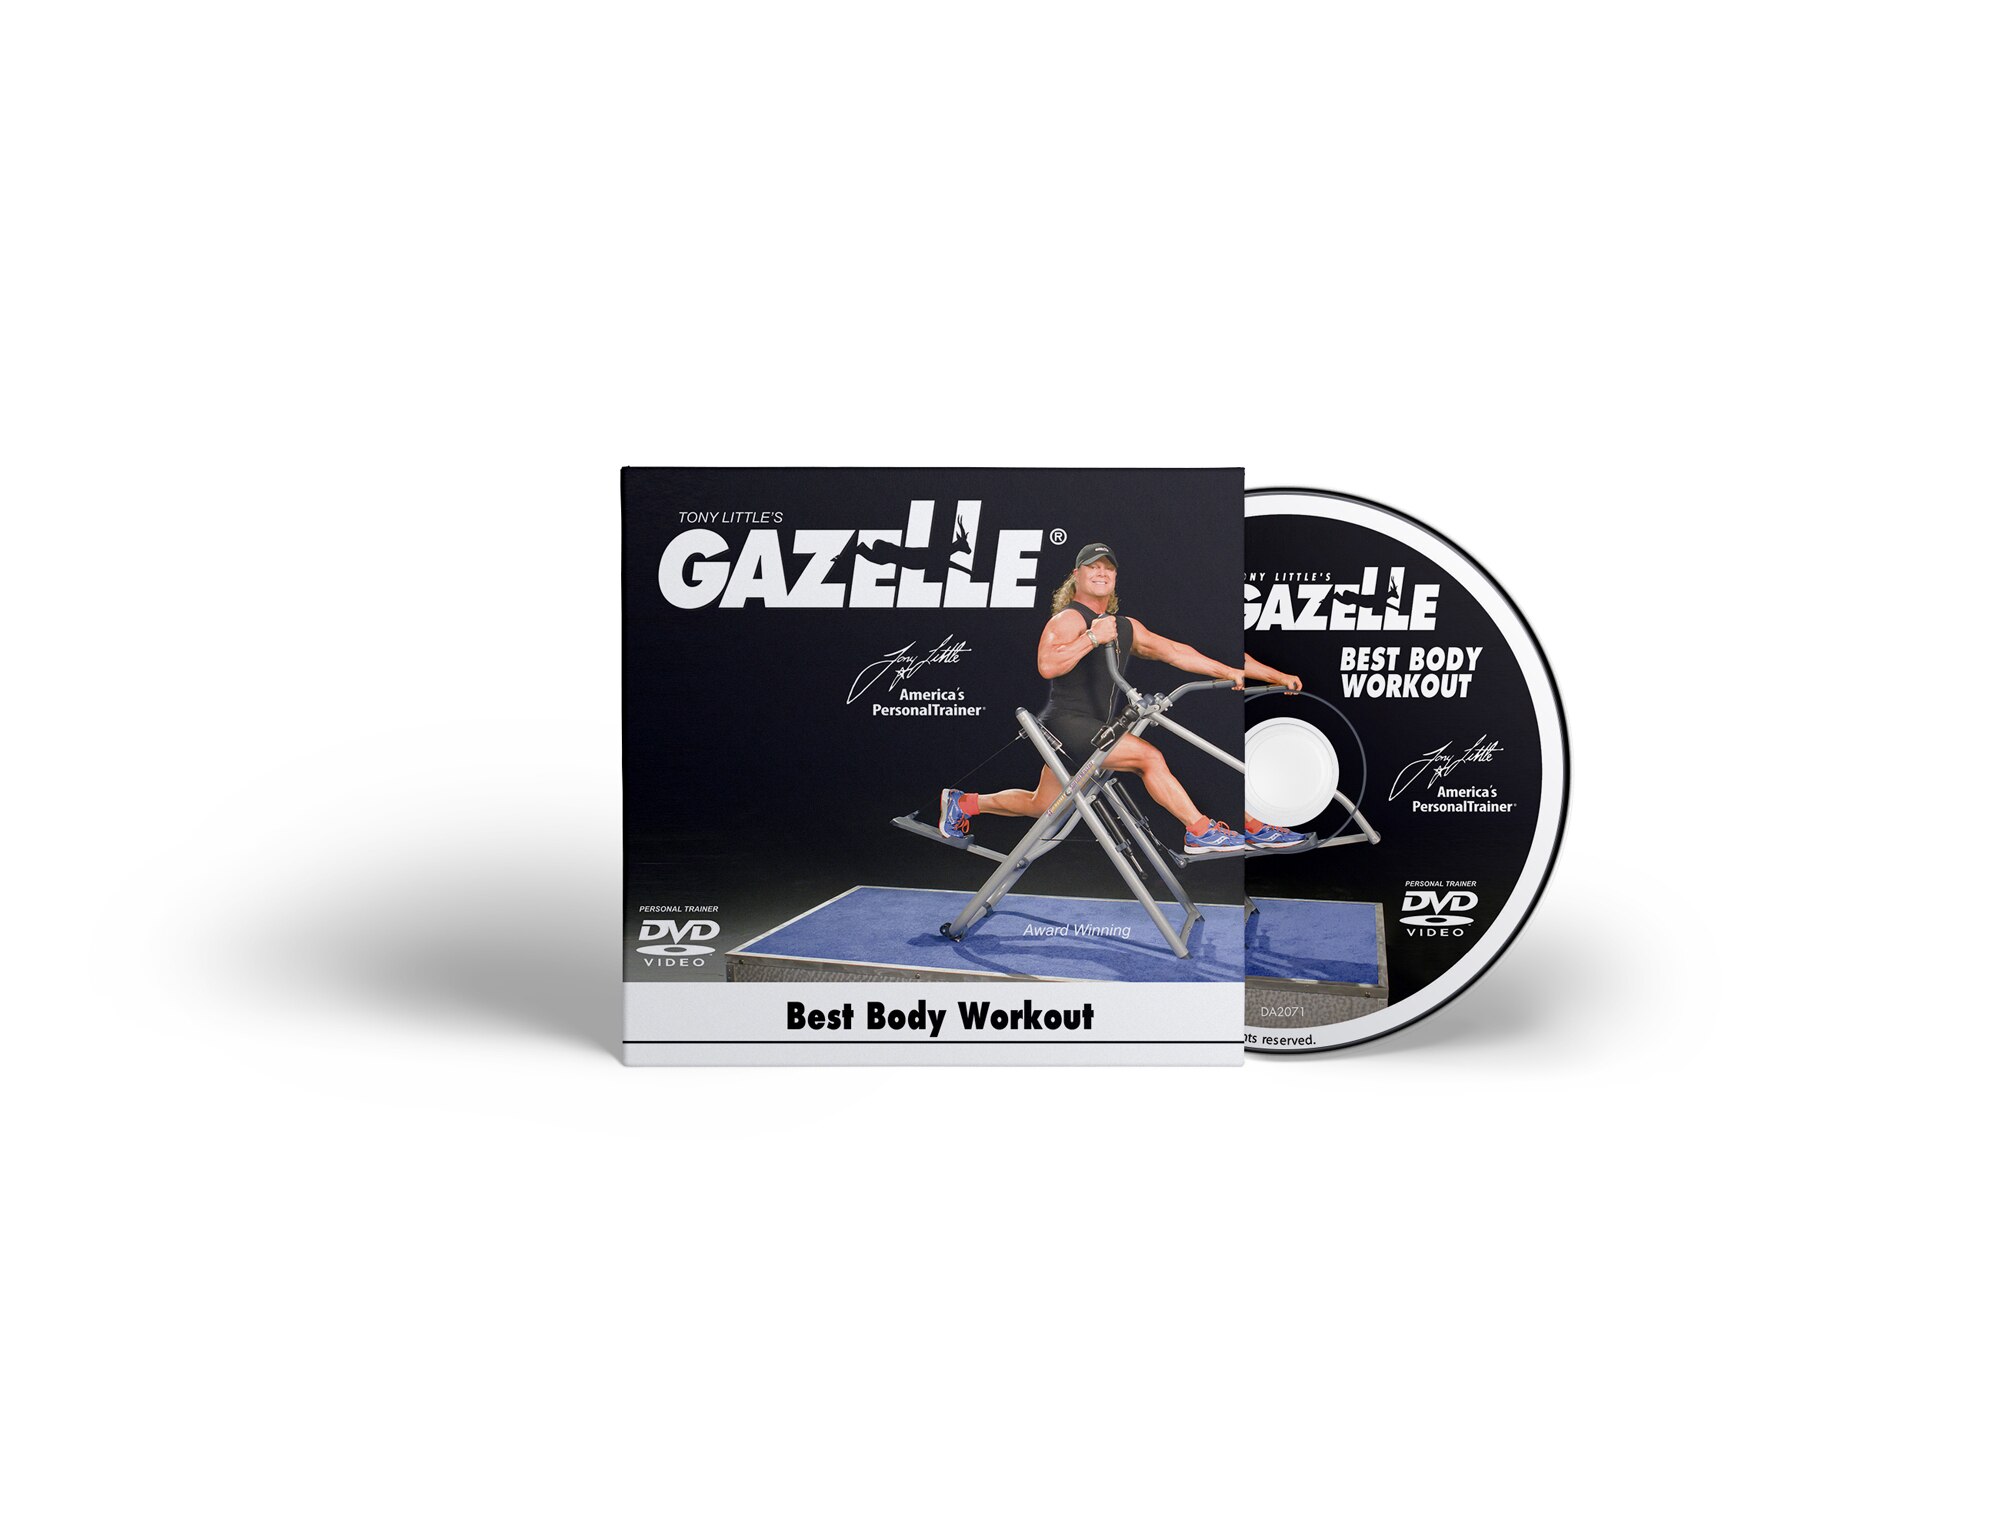 gazelle total body trainer